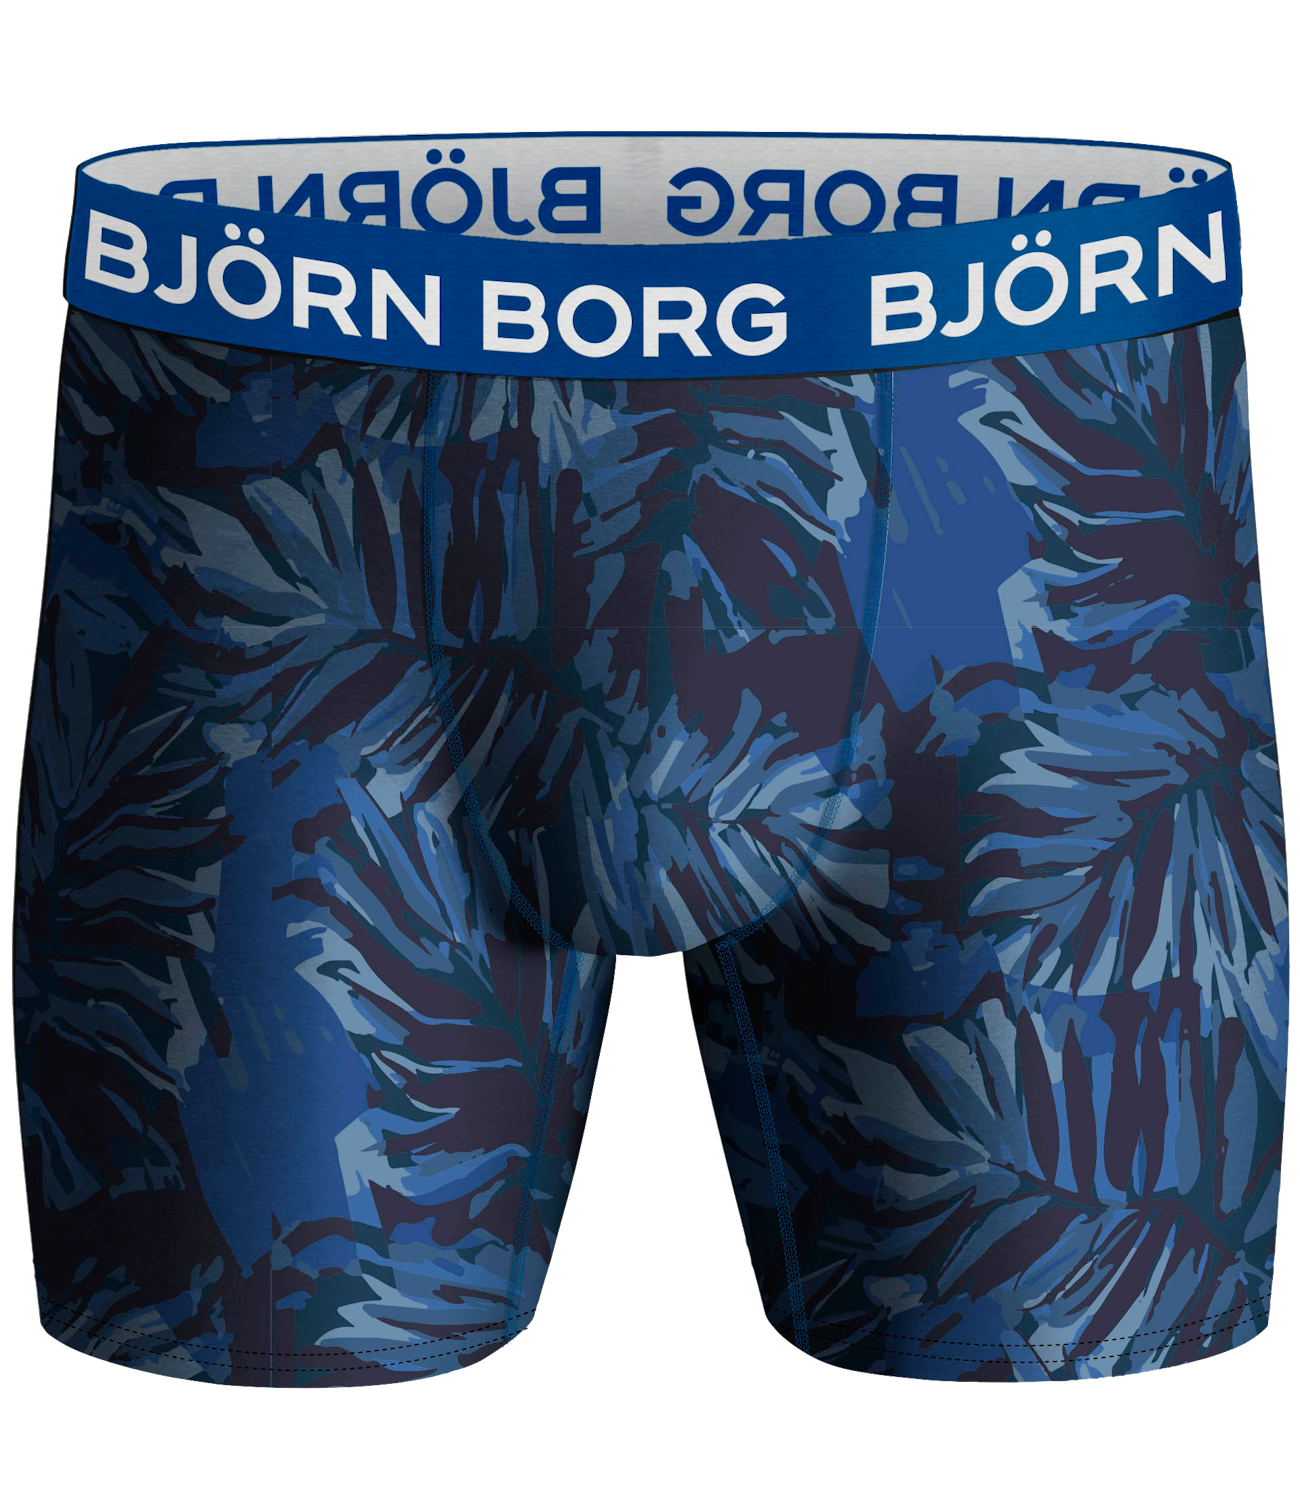 Björn Borg Boxers - 5-Pack - Green/Black/Grey » ASAP Shipping